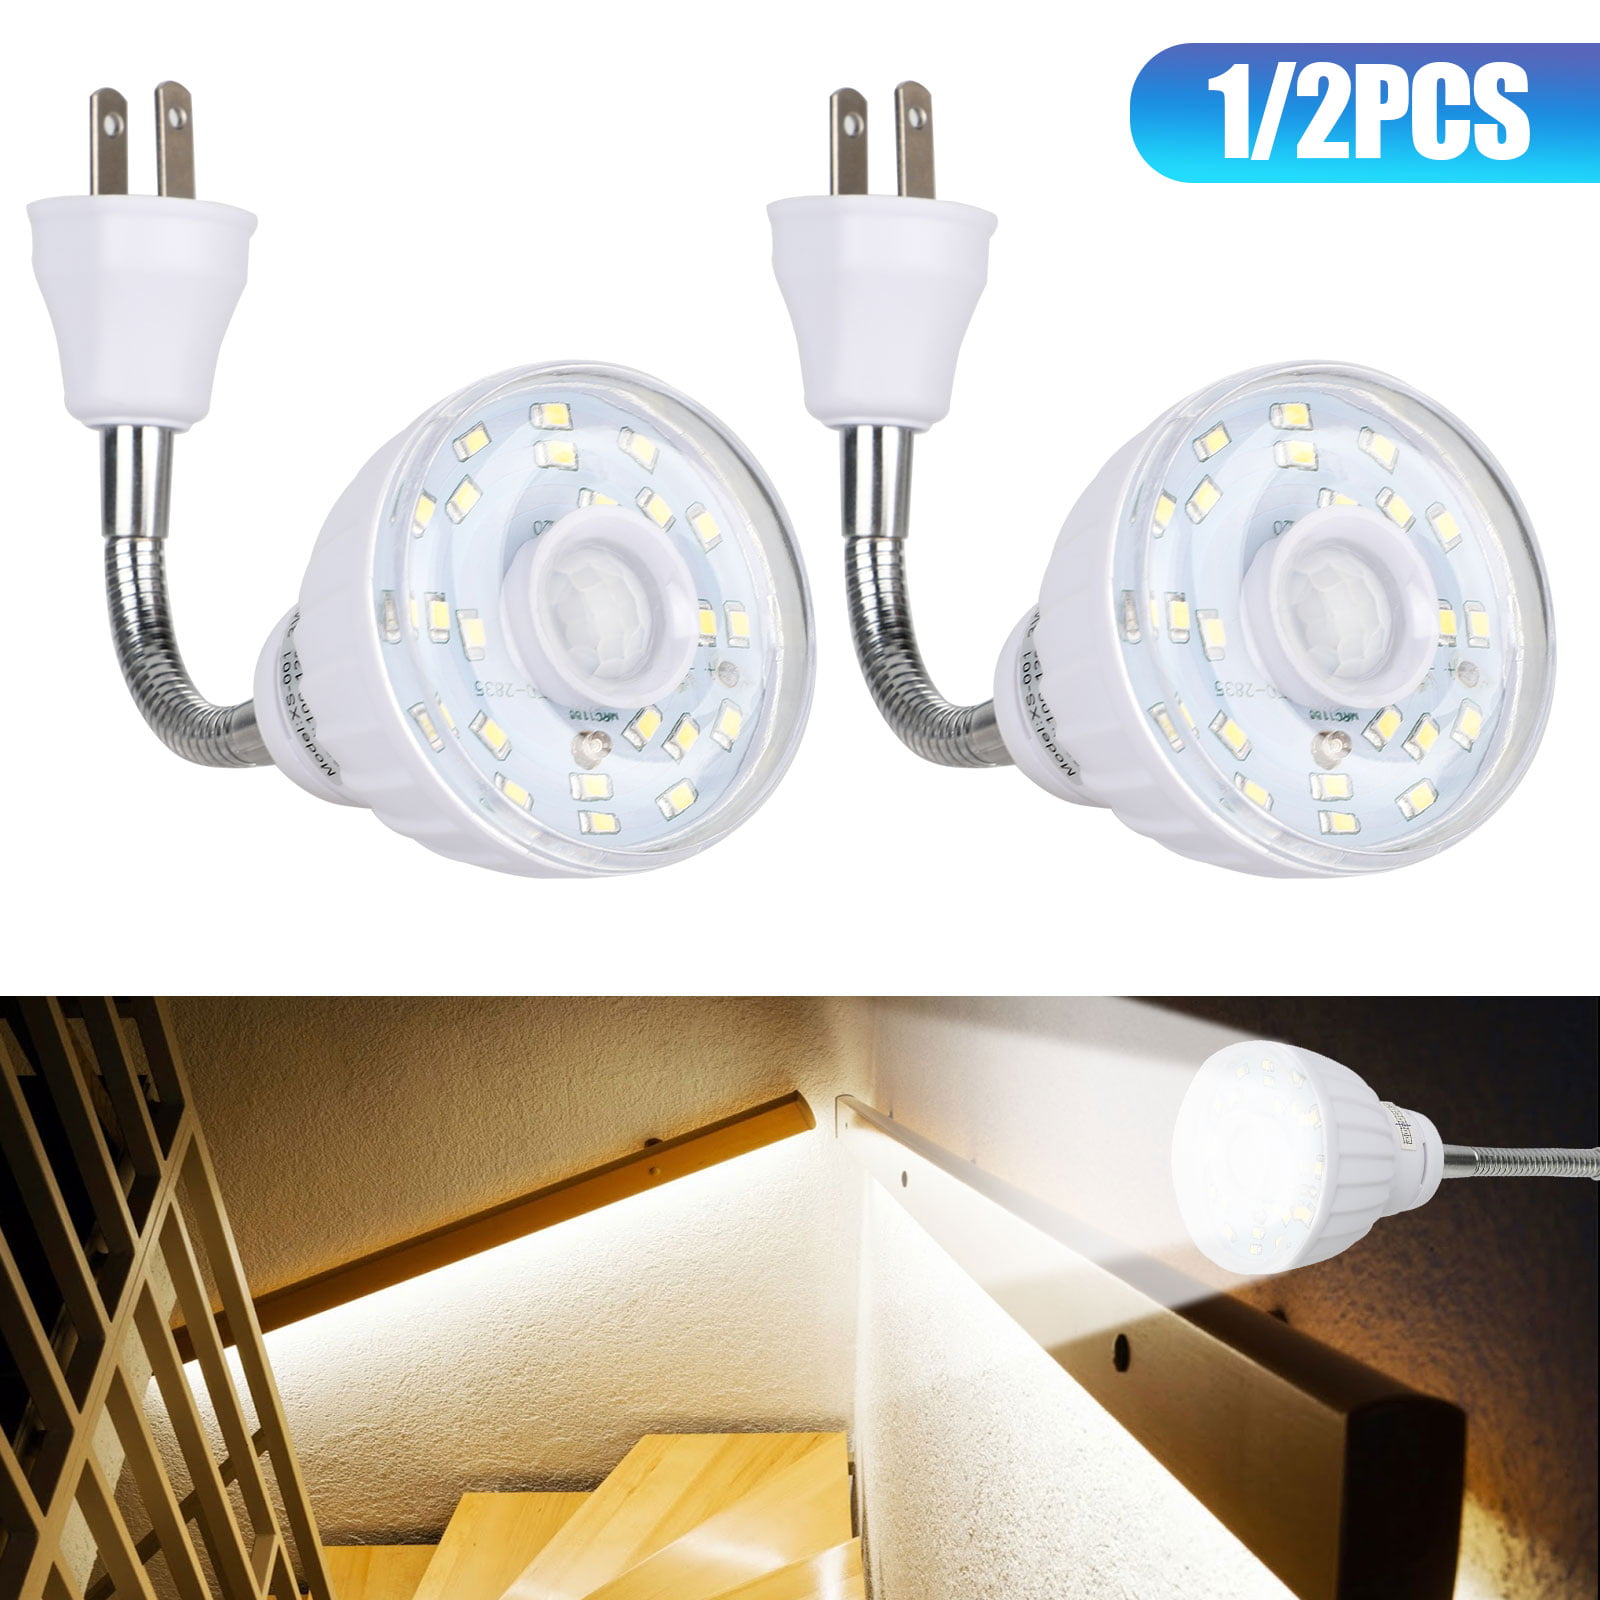 2 Pack Motion Sensor Lights Indoor Plug in Wall Led Night Light PIR Movement Sensor Warm White lamp for Kids,Children,Hallway,Bathroom,Stairs,Nursery 